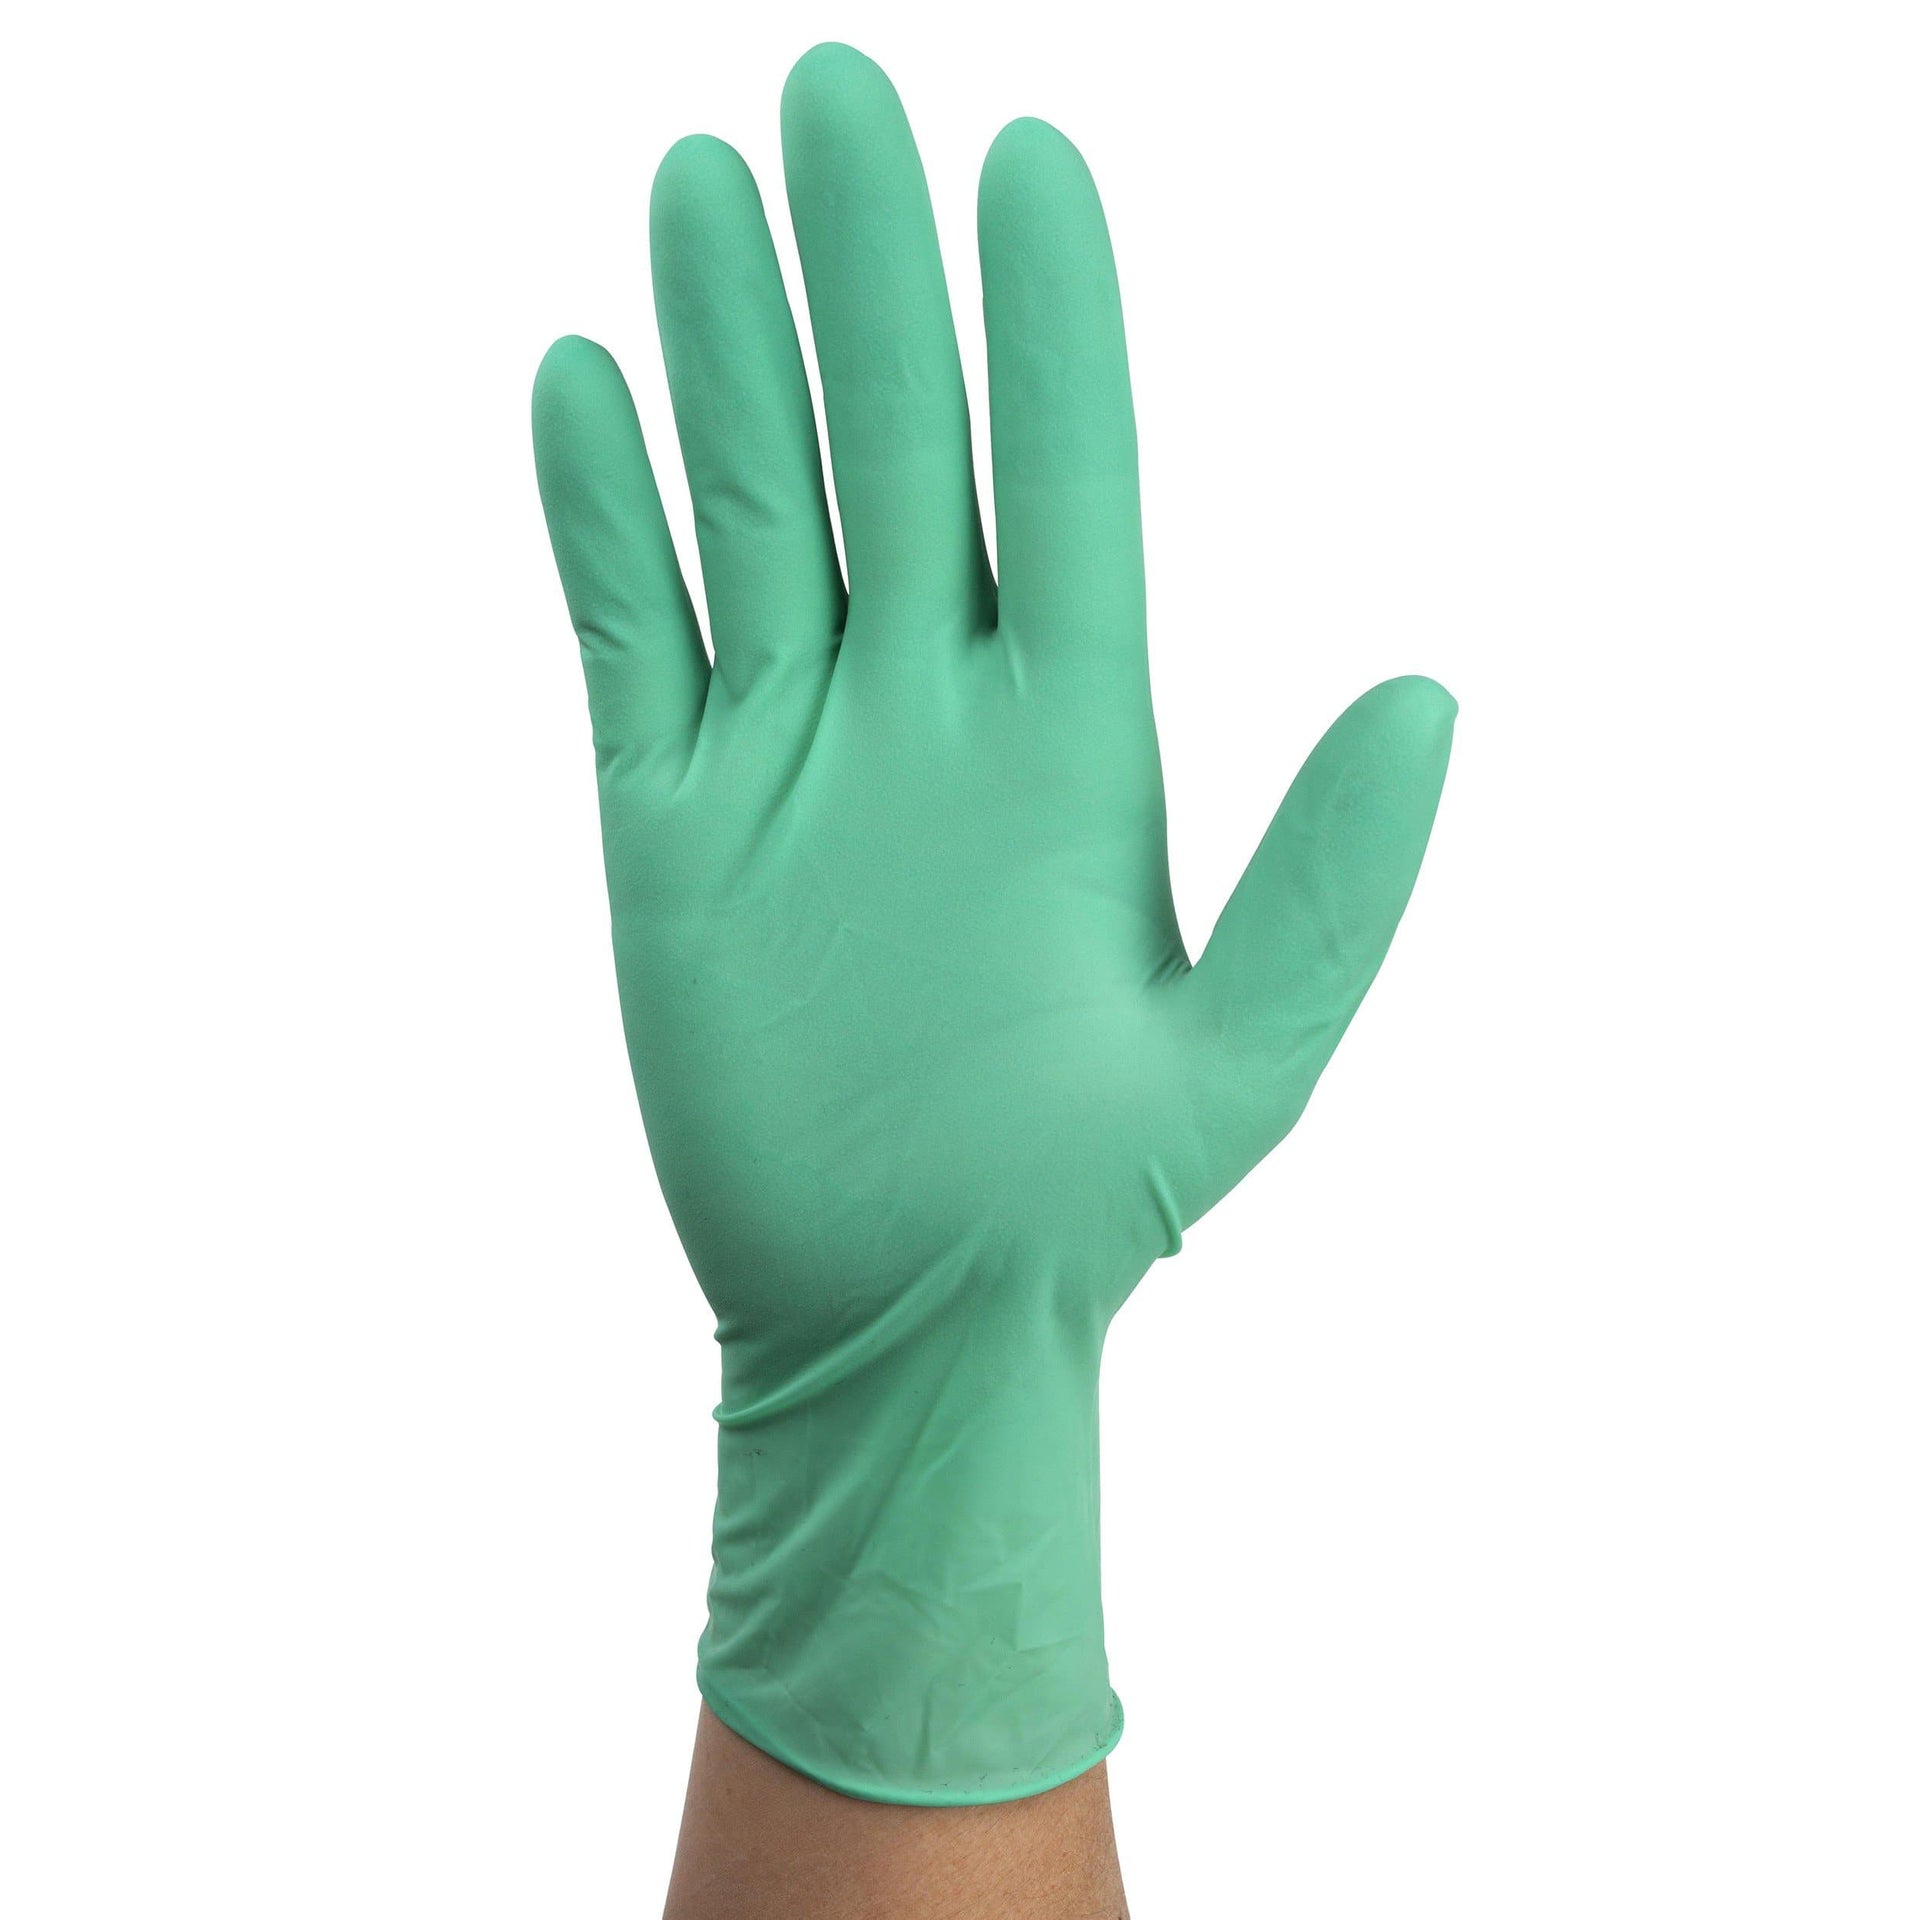 Dynarex Aloetex Latex Exam Gloves - Coated with Aloe - Senior.com Exam Gloves